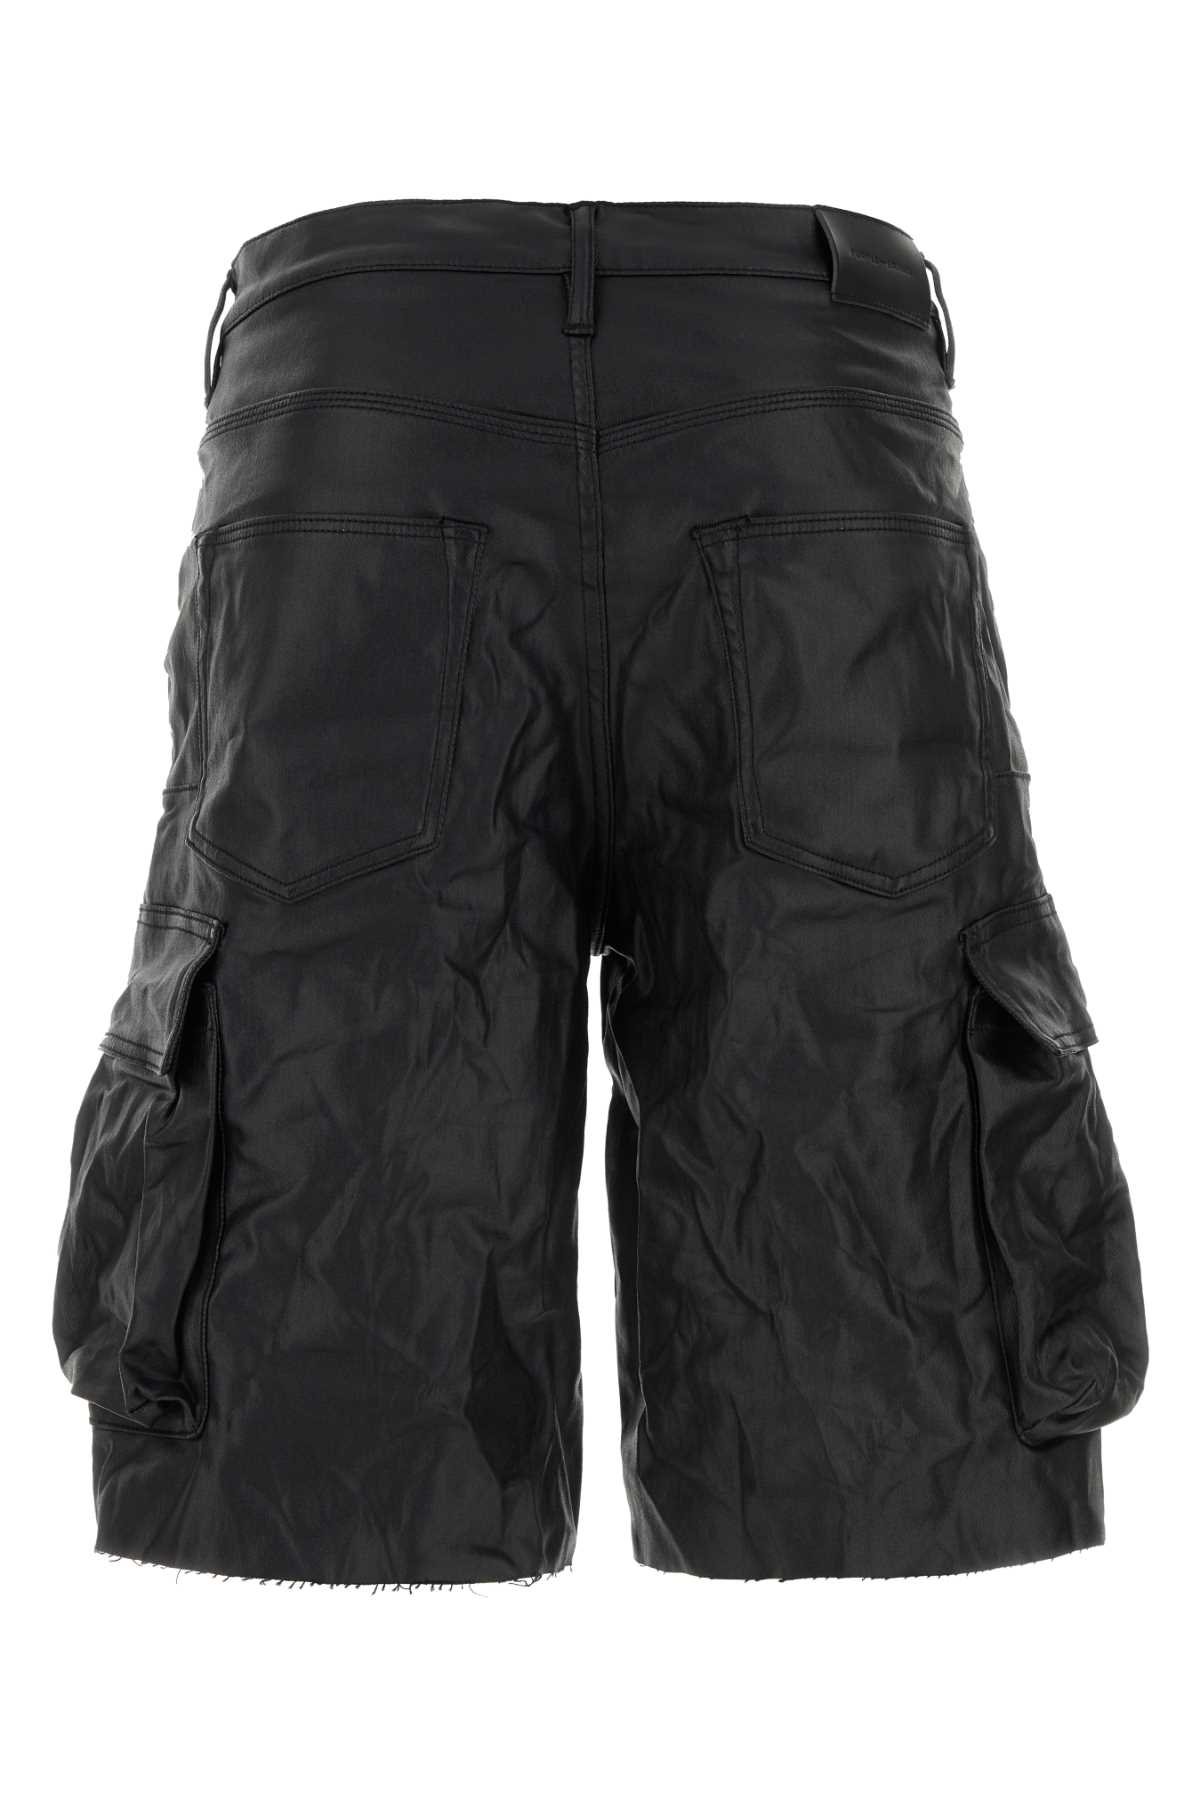 Purple Brand Black Stretch Synthetic Leather P022 Bermuda Shorts